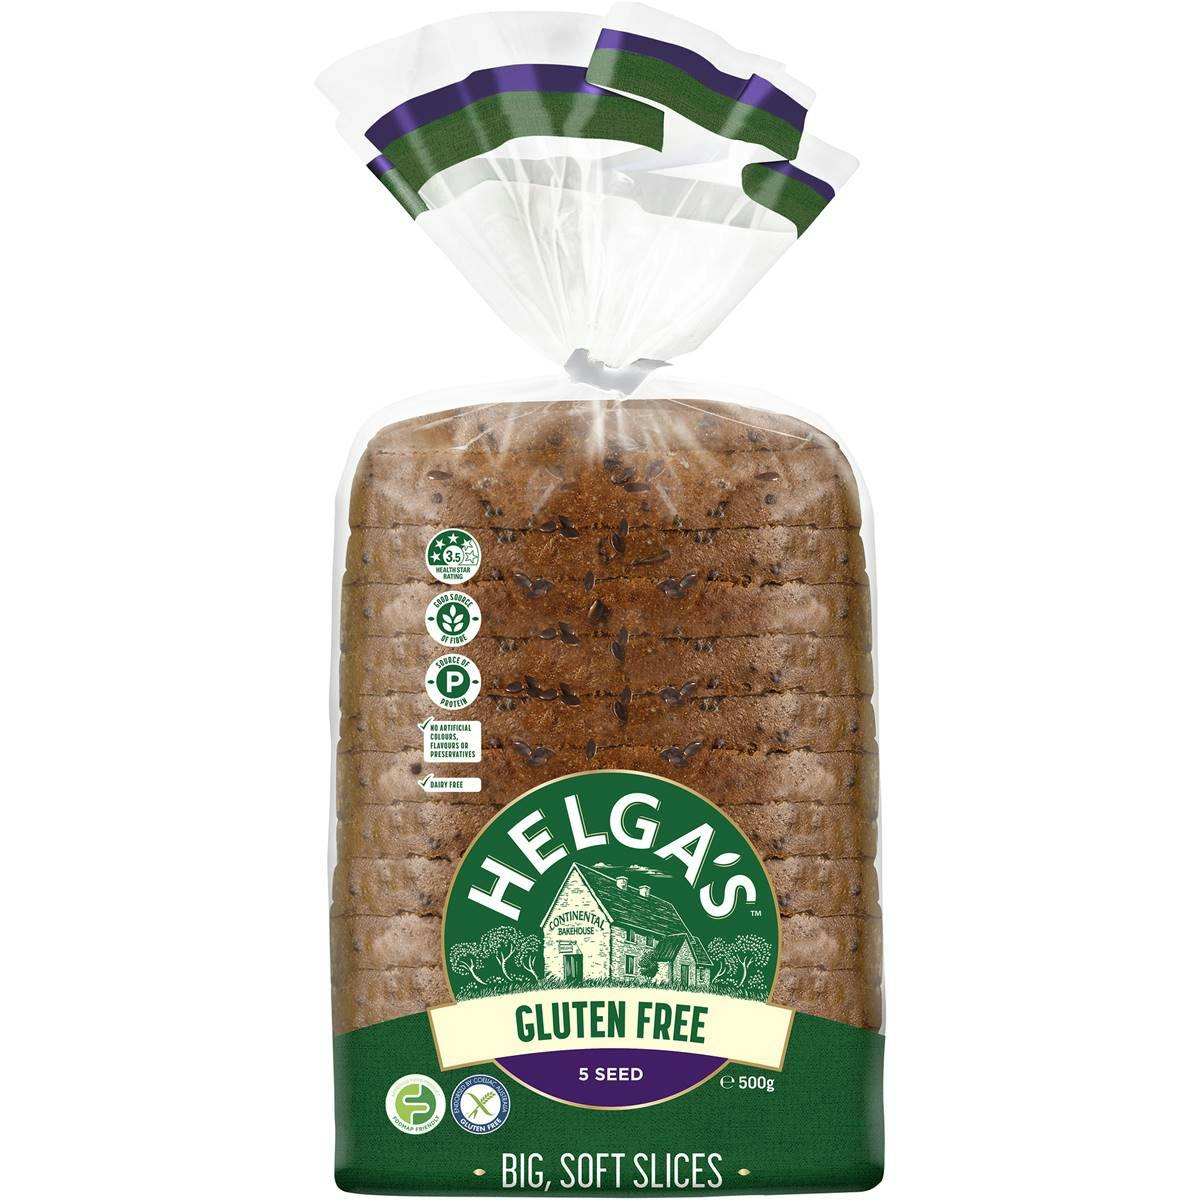 Helga's Gluten Free 5 Seed Loaf